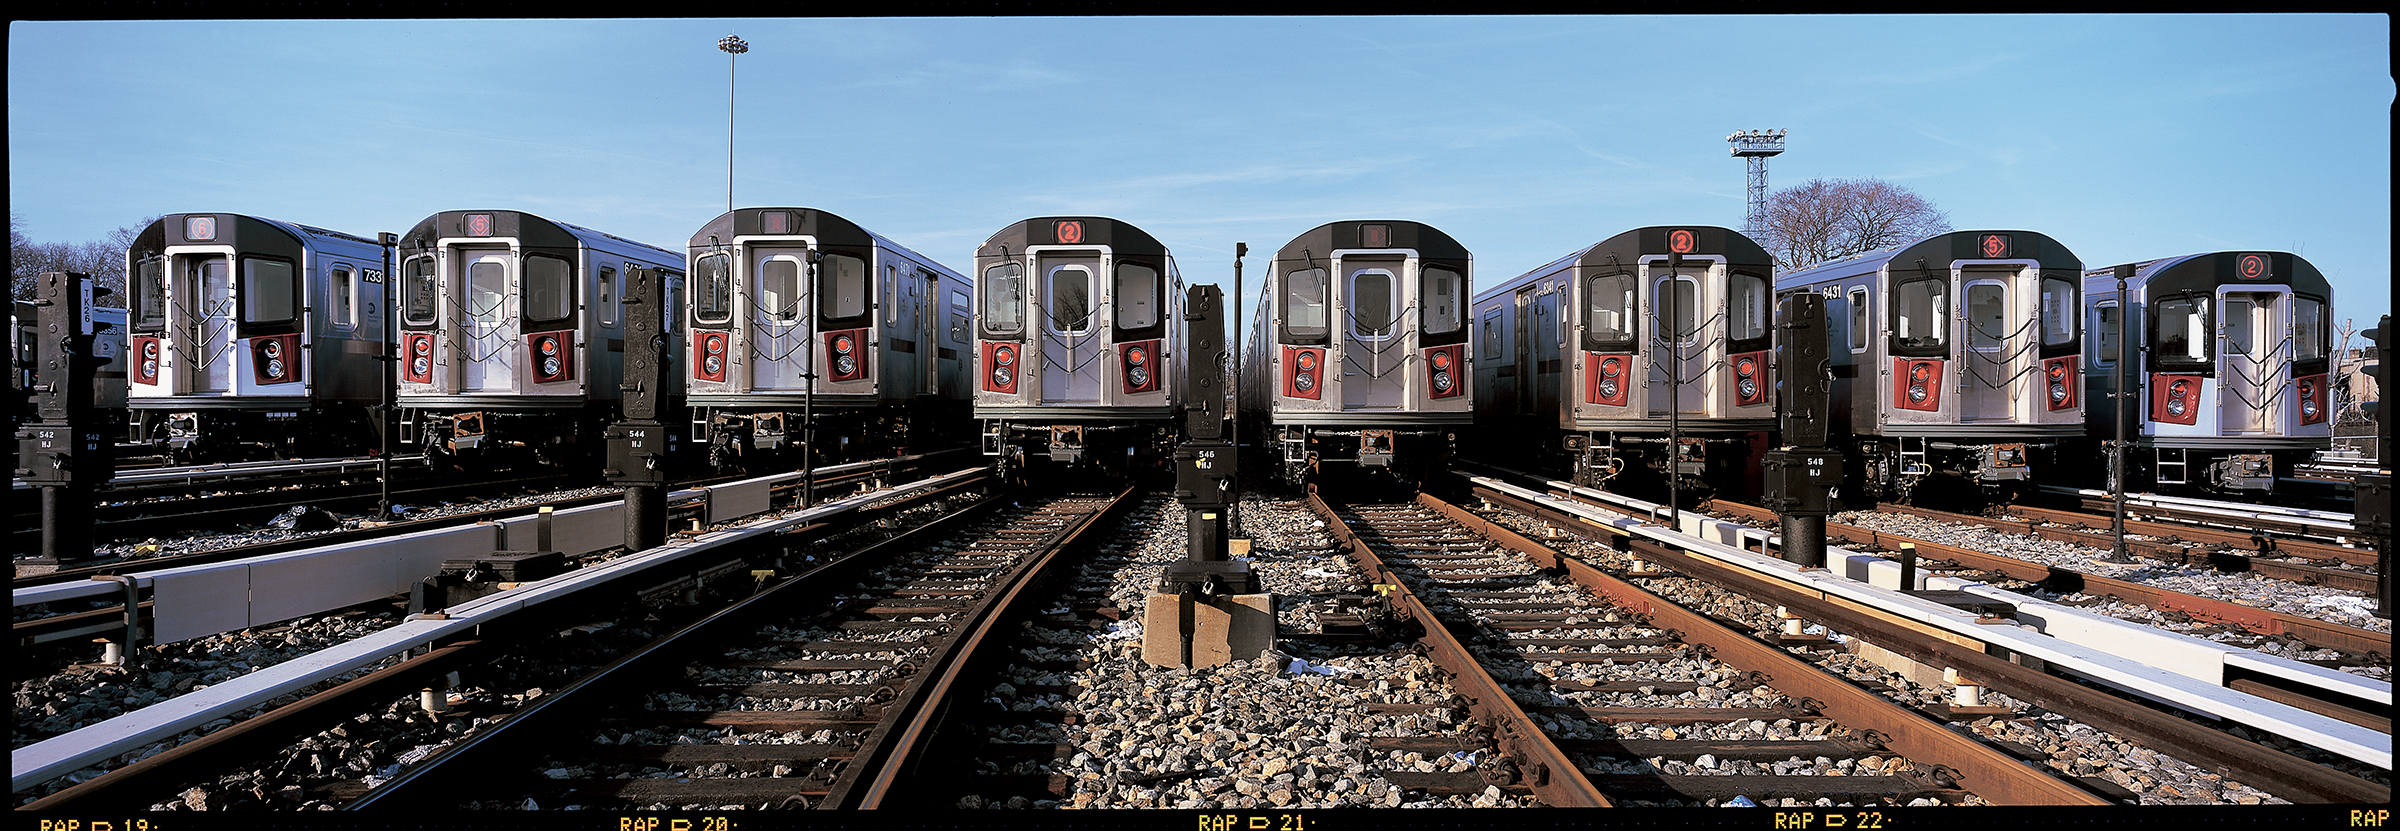 Subway cars in a rail yard